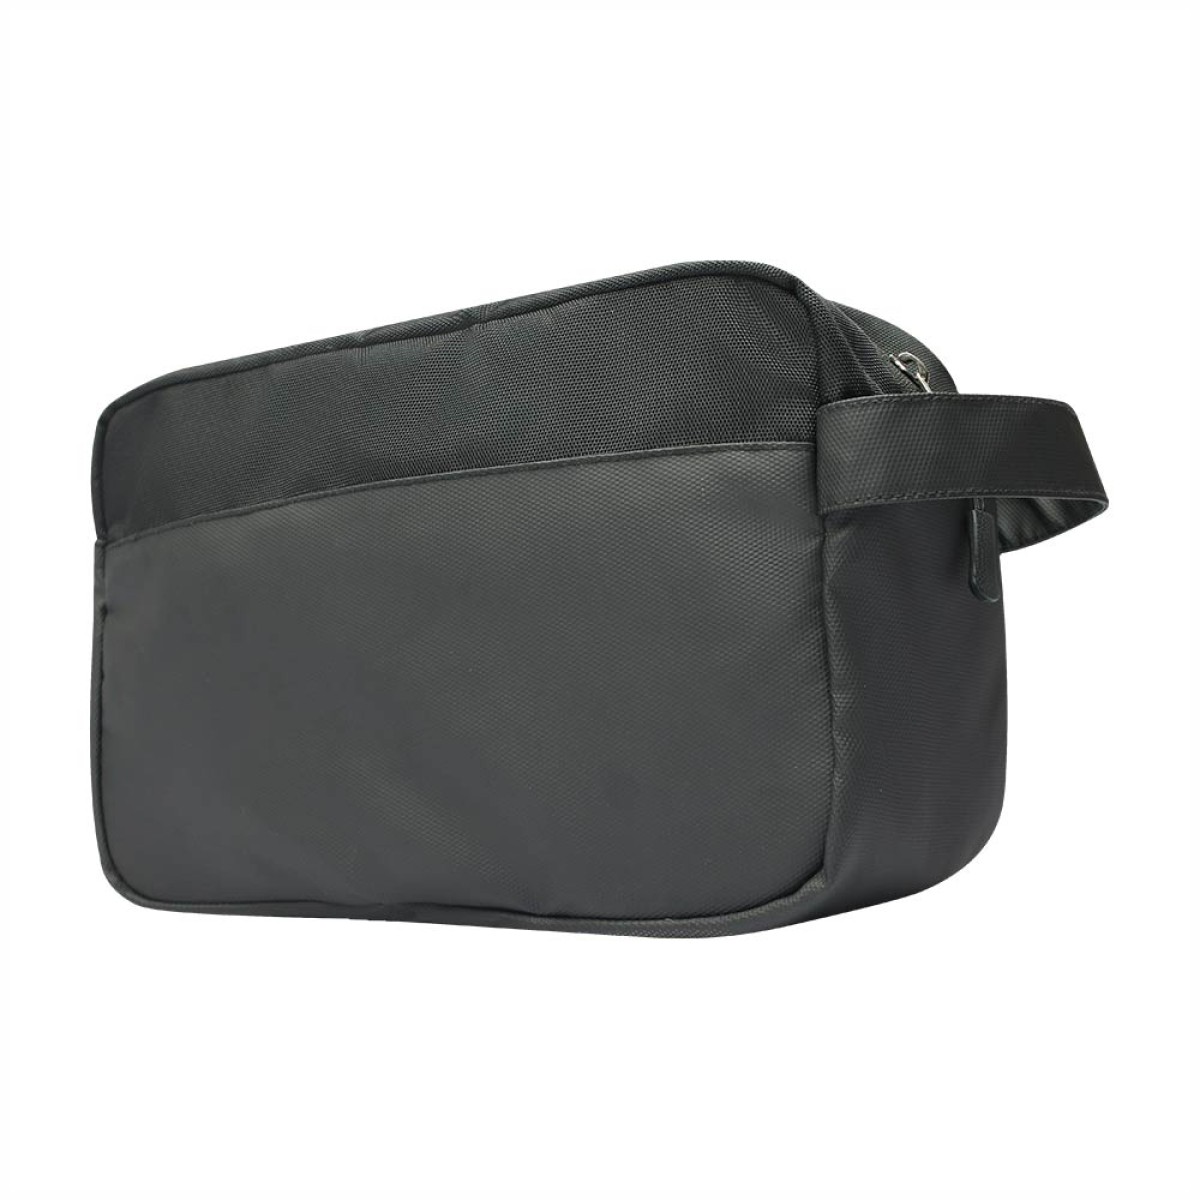 travel-carry-hand-bag-ktchb35310